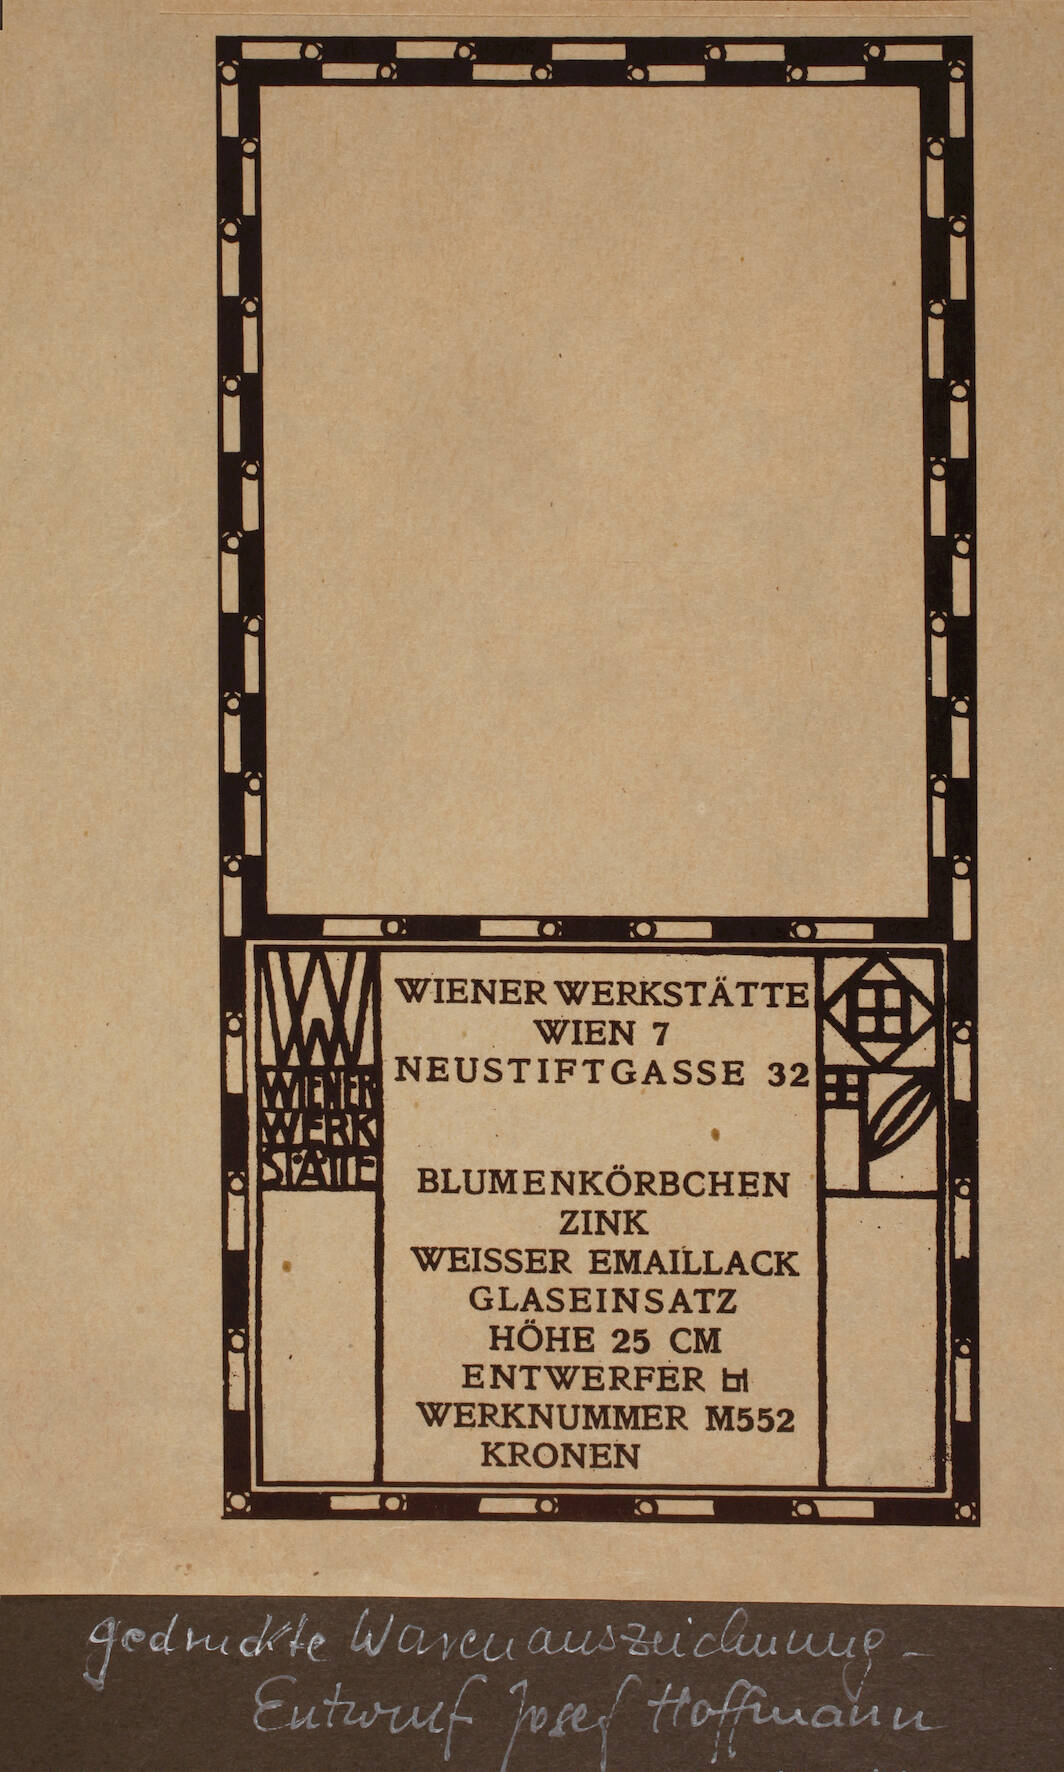 Musterkarte Wiener Werkstätte